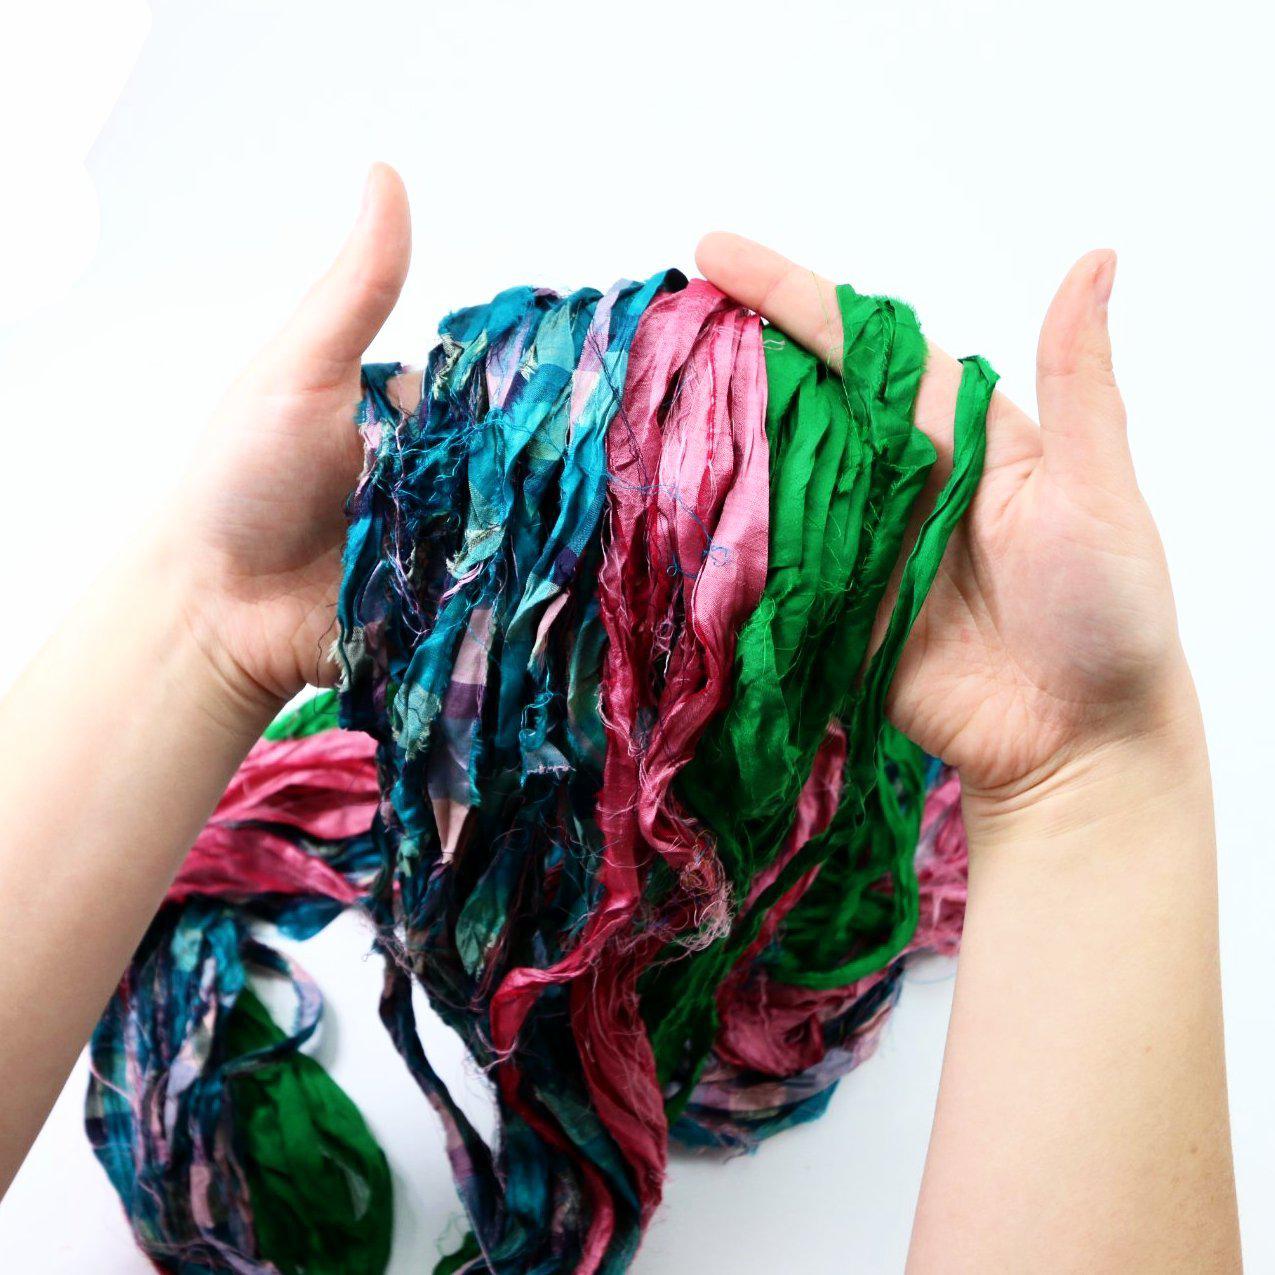 Revolution Fibers Multi-Color Recycled Sari Silk Yarn, Handspun